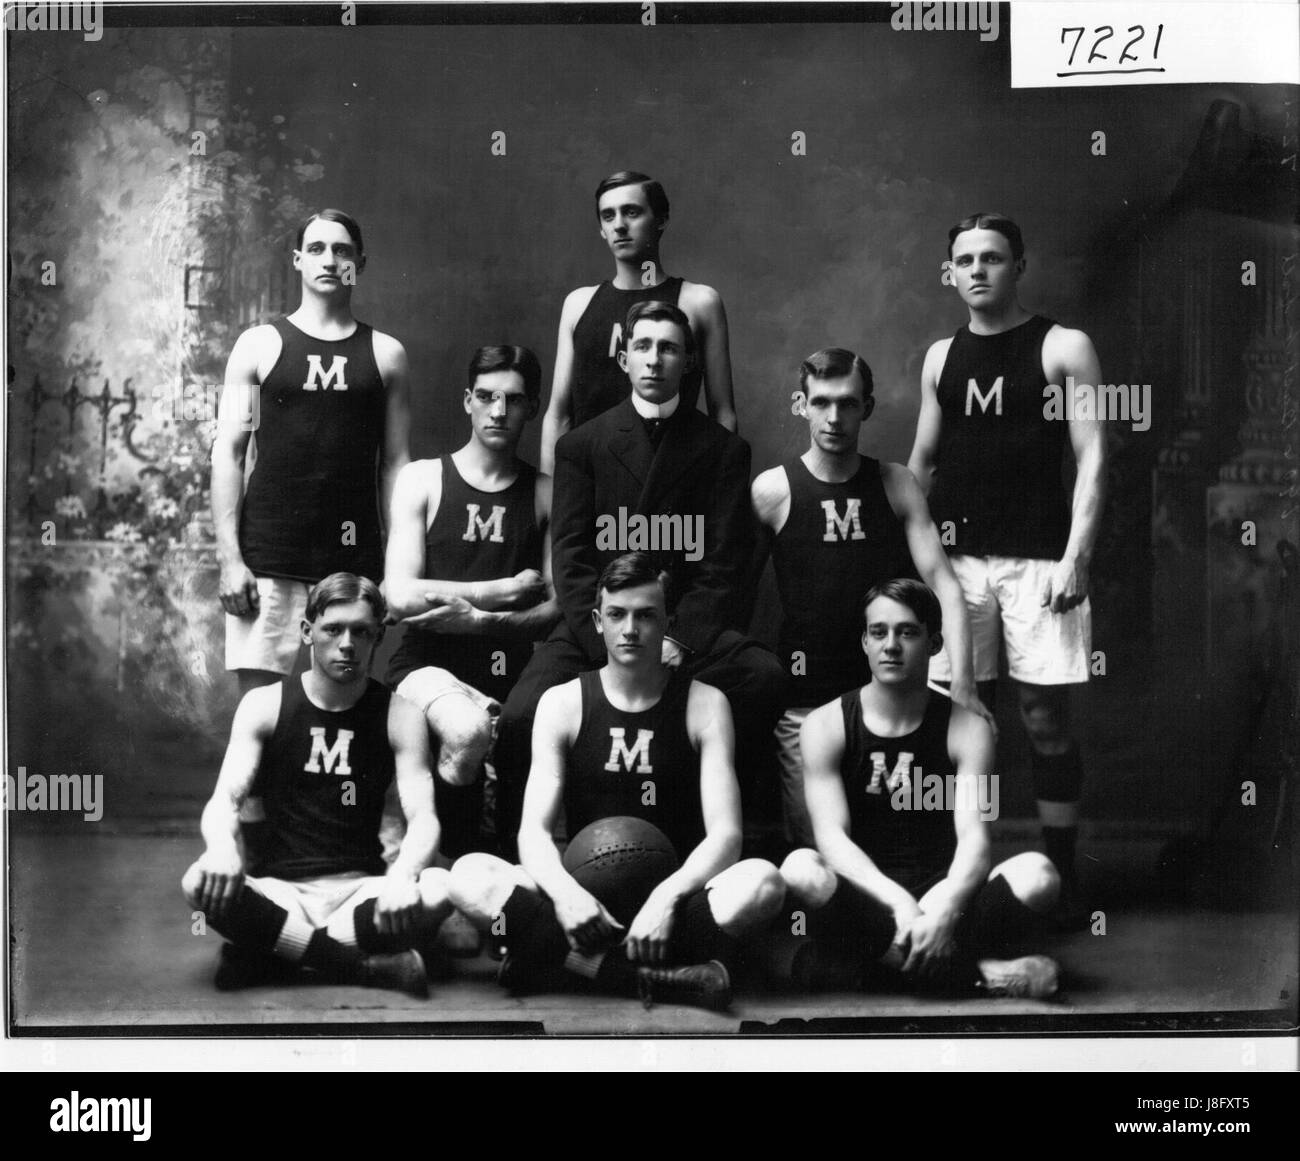 miami-university-basketball-team-in-1906-3199638959-stock-photo-alamy